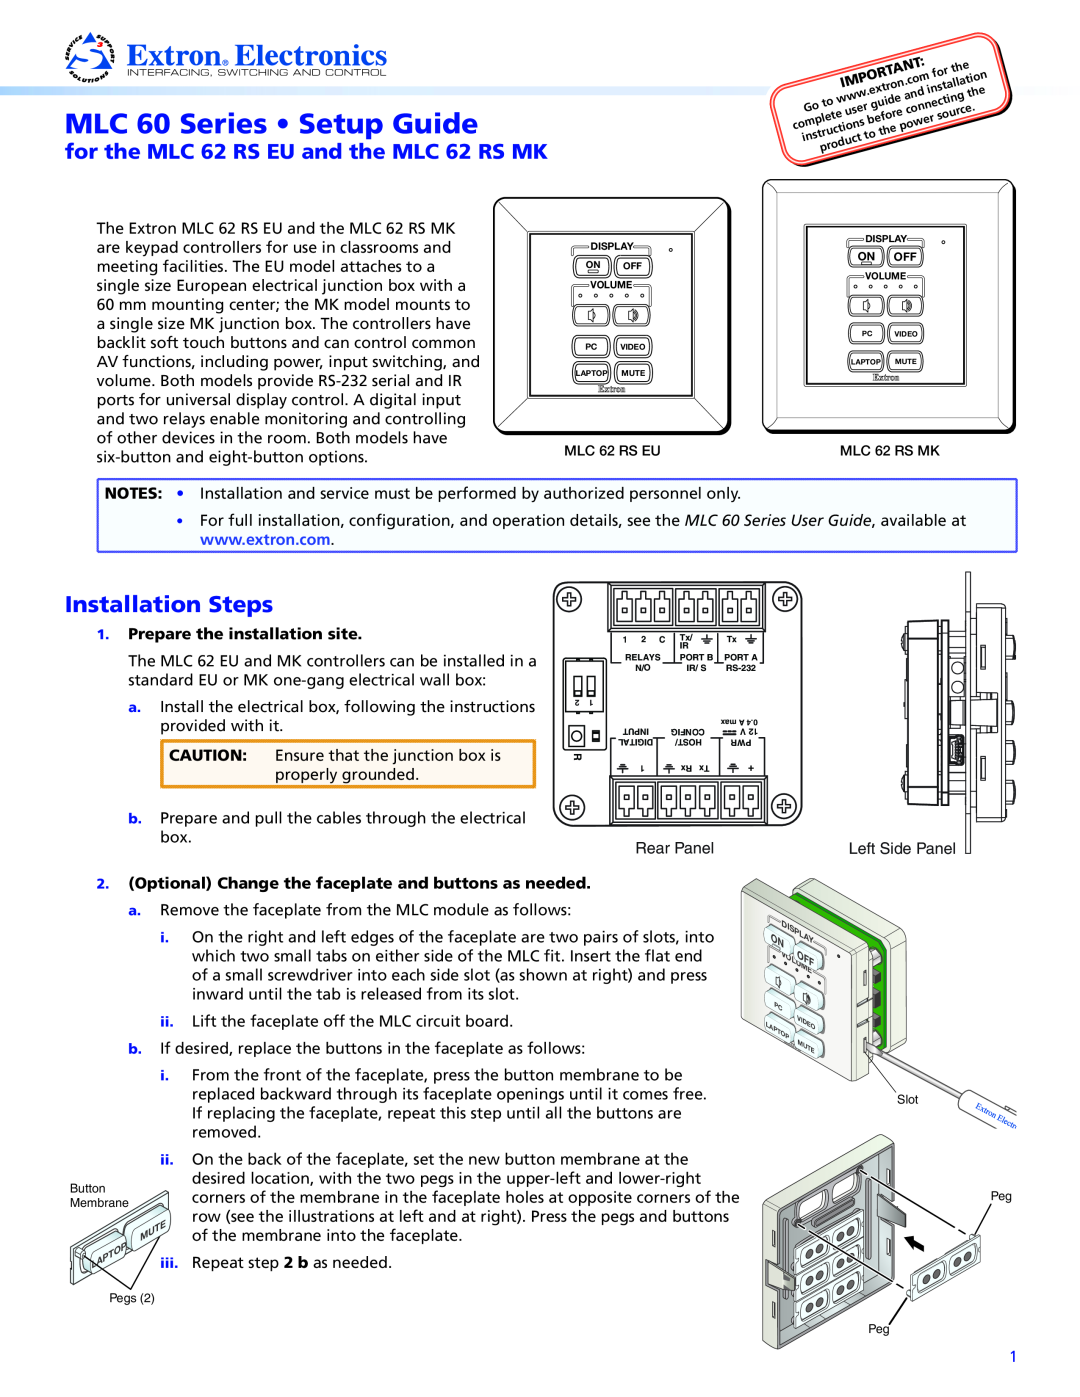 Extron electronic MLC 62 RS EU setup guide MLC 60 Series Setup Guide, Installation Steps, Prepare the installation site 